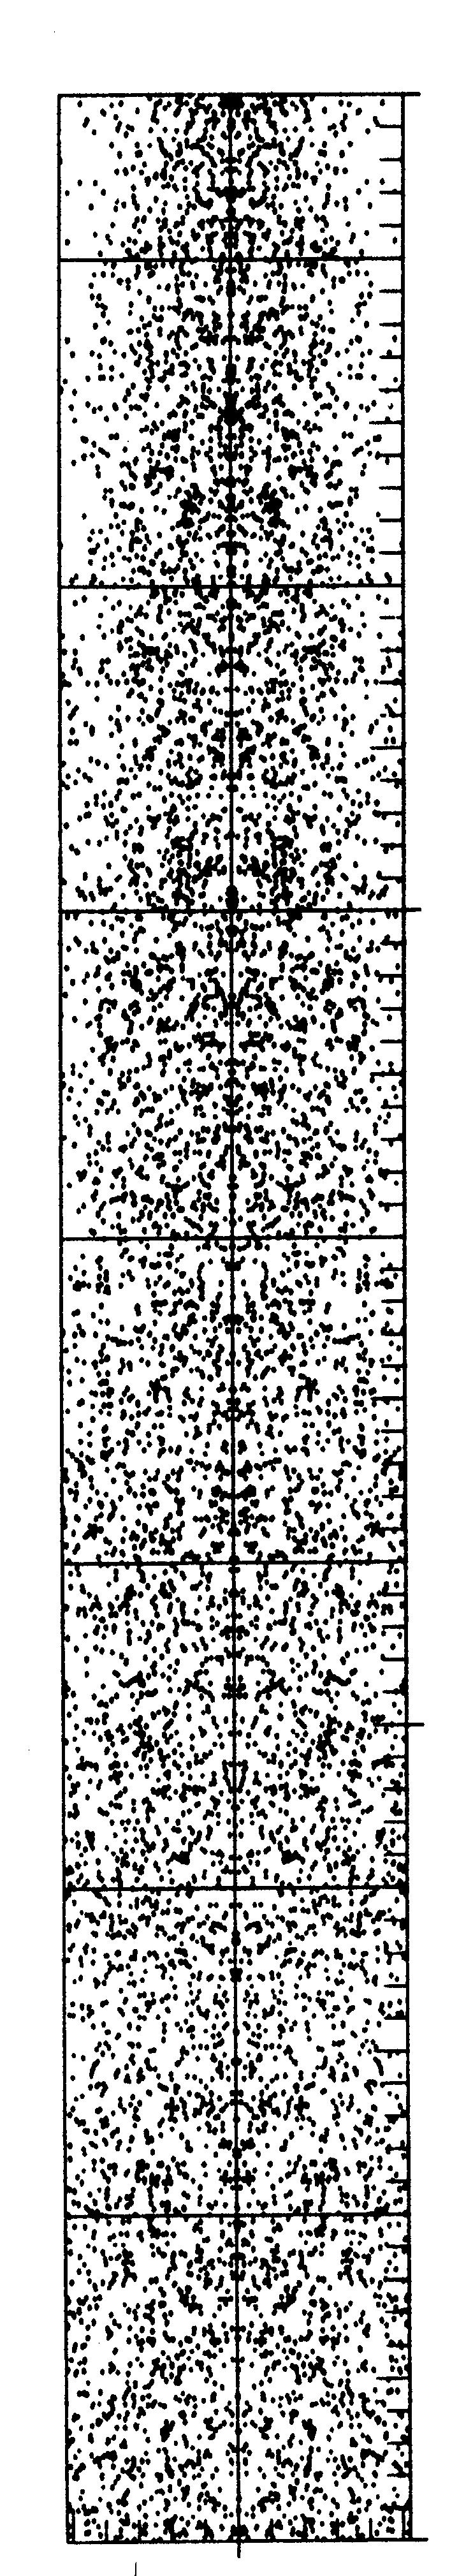 with 400 µm (Lee und urst, 198): Imortance of